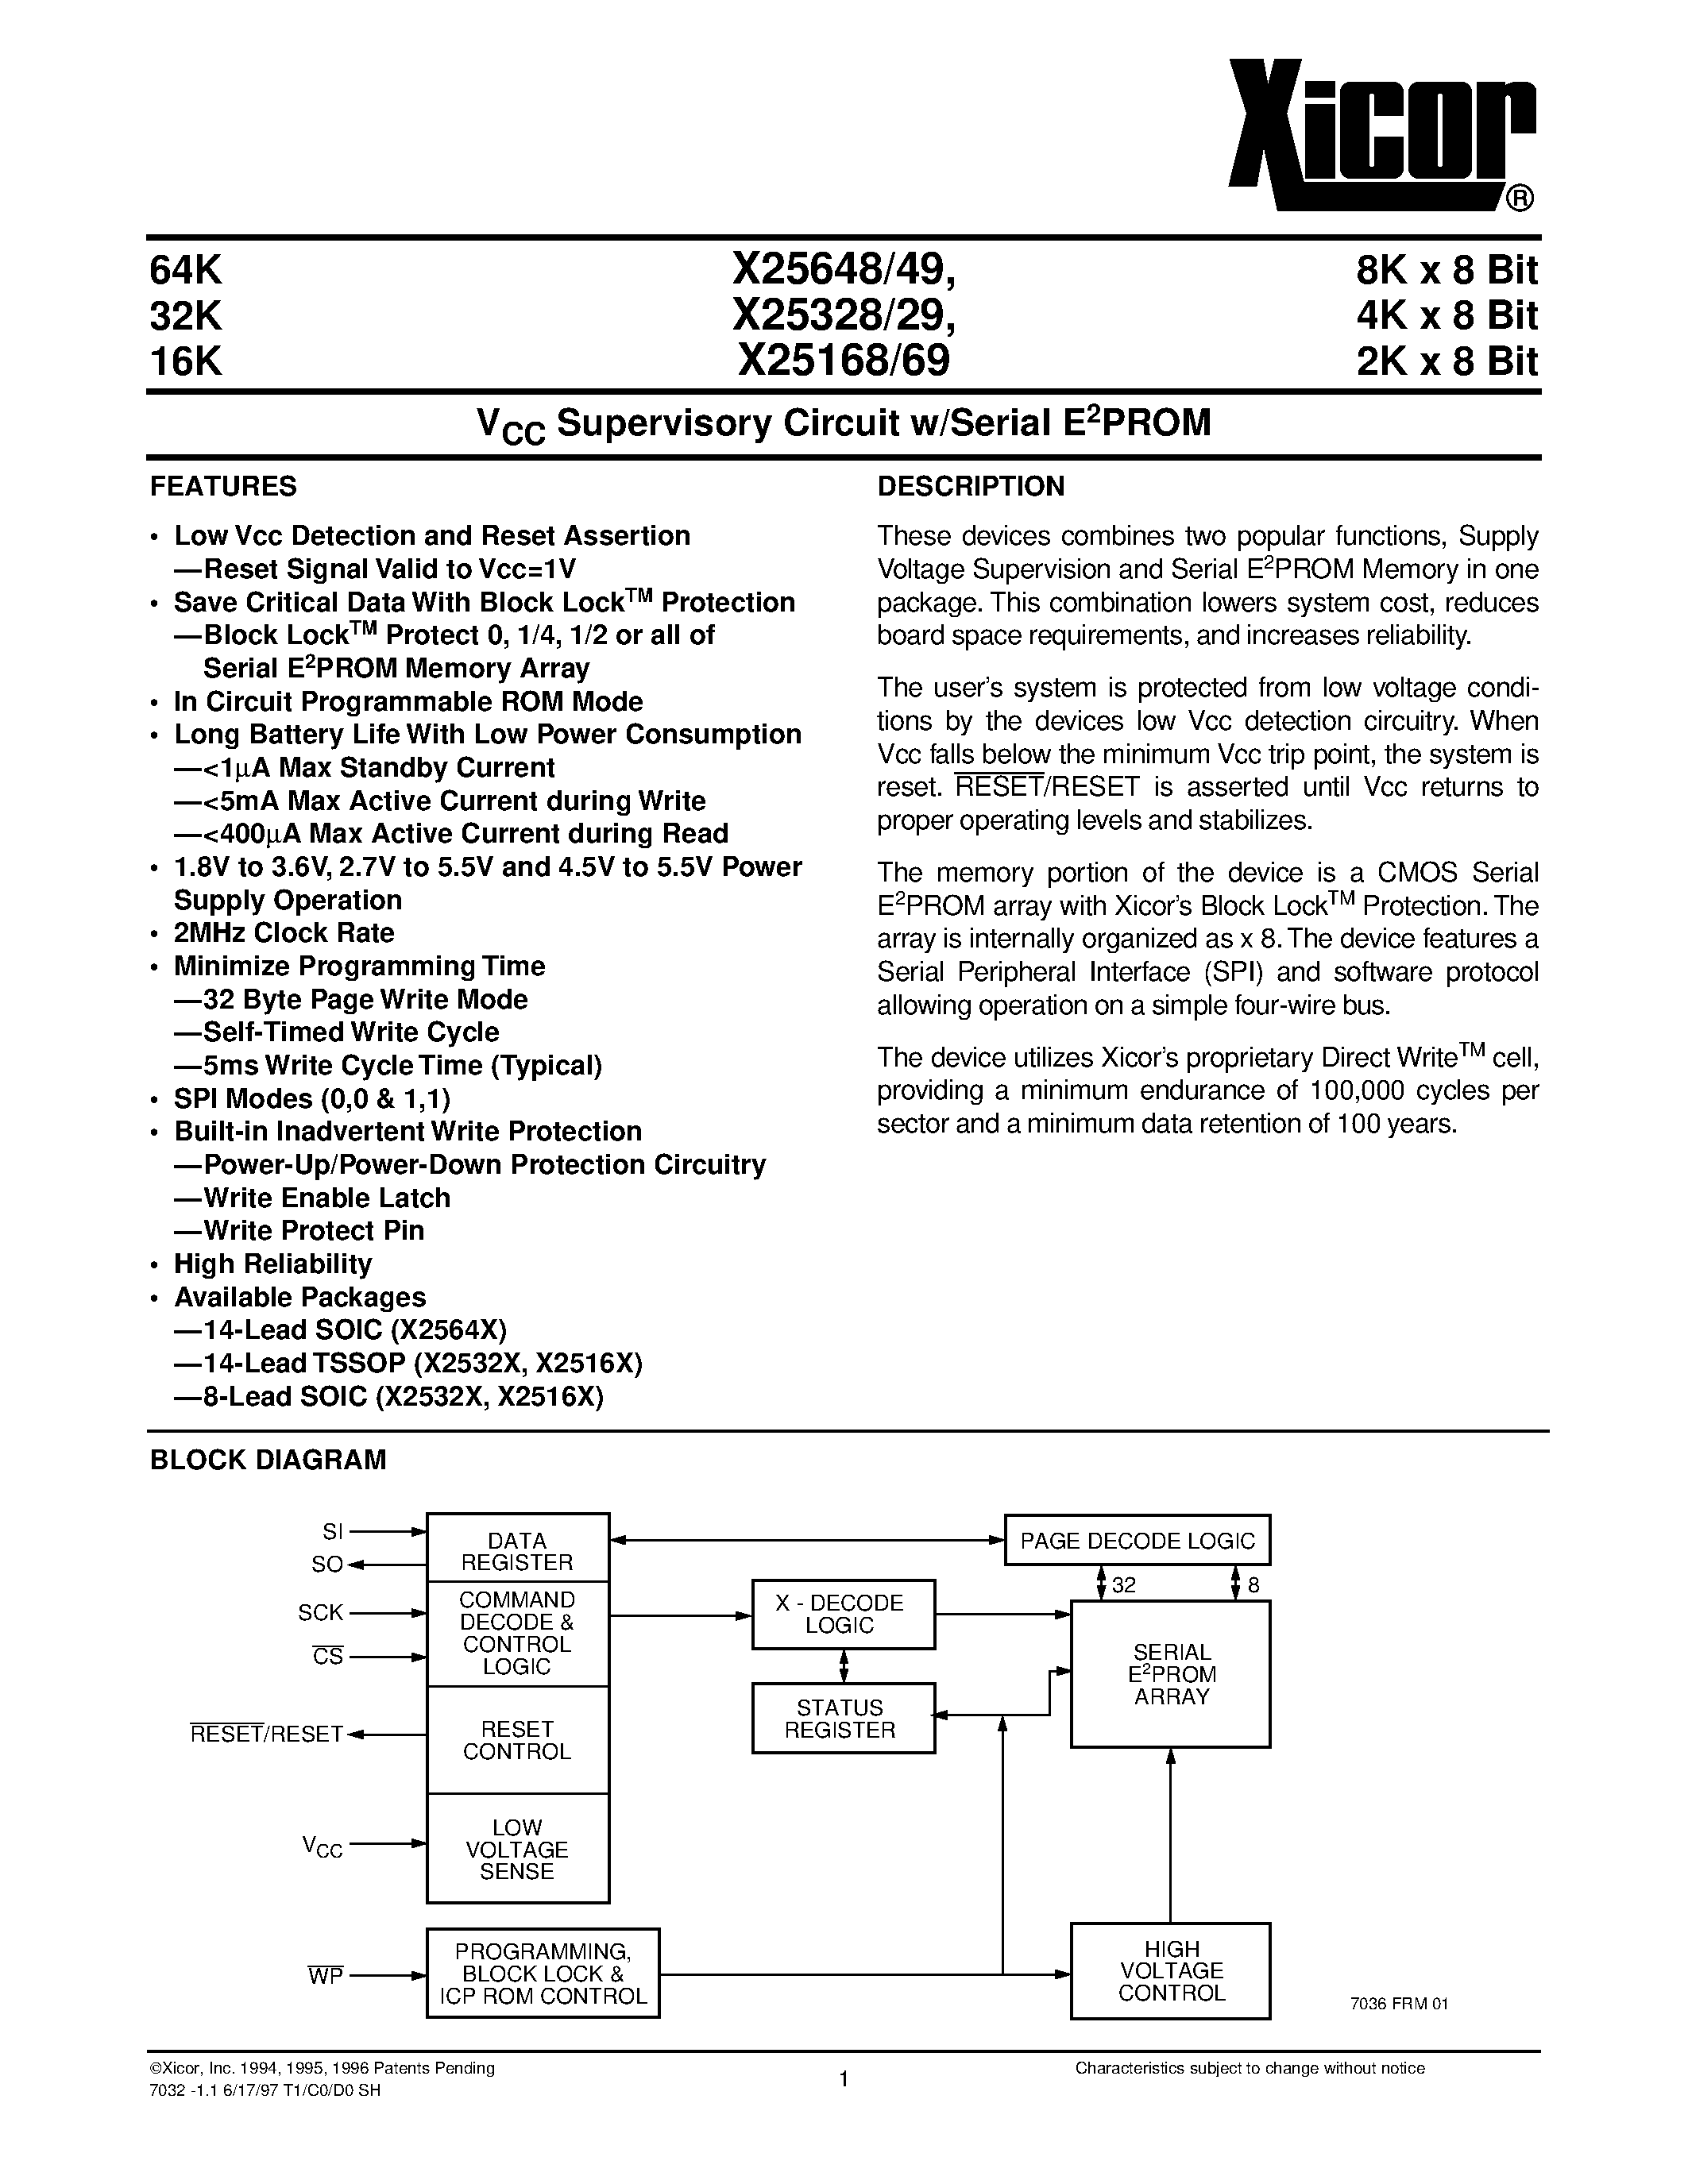 Даташит X25649V14-1.8 - V CC Supervisory Circuit w/Serial E 2 PROM страница 1